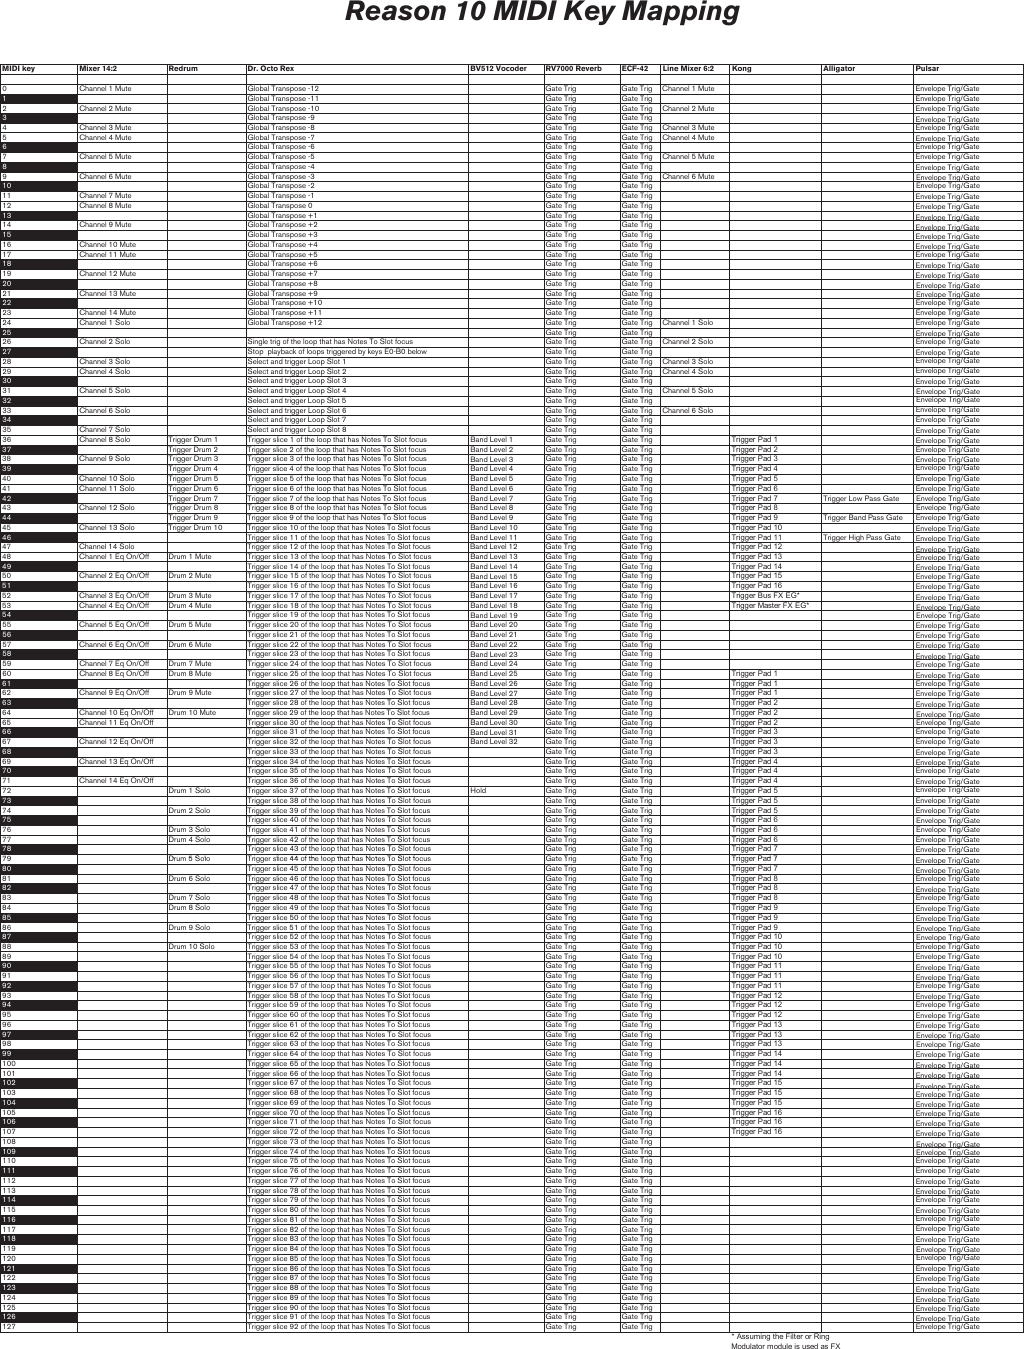 Page 9 of 9 - Reason 10 MIDI Implementation Chart - 10.0 EN